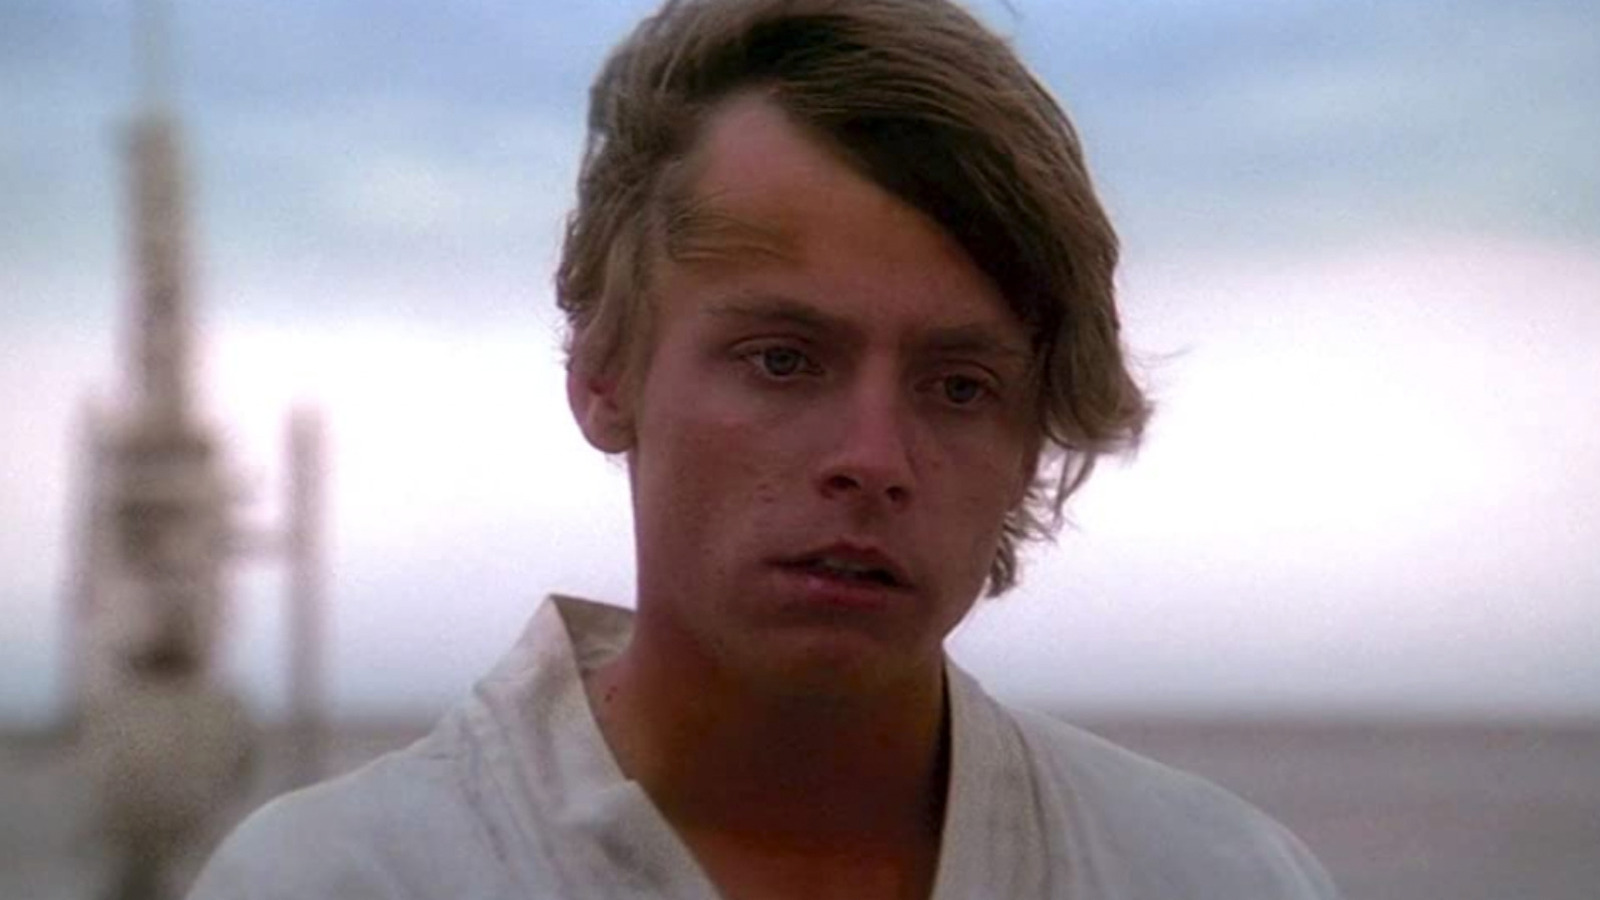 Mark Hamill Says He Cannot Imagine Playing Luke Skywalker Again